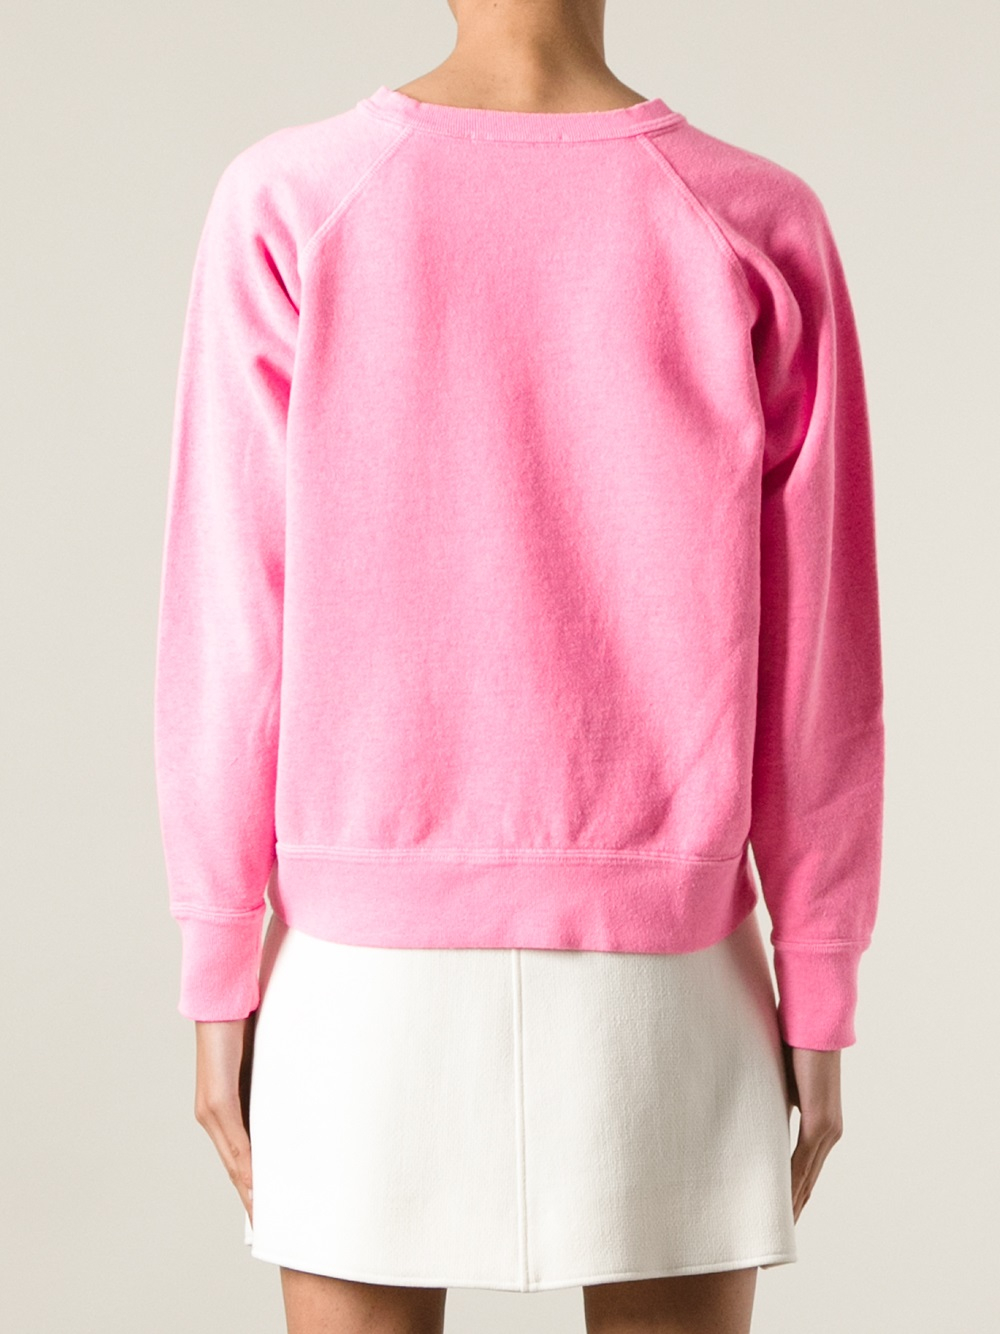 Lyst - Étoile Isabel Marant Good Morning Tokyo Sweatshirt in Pink